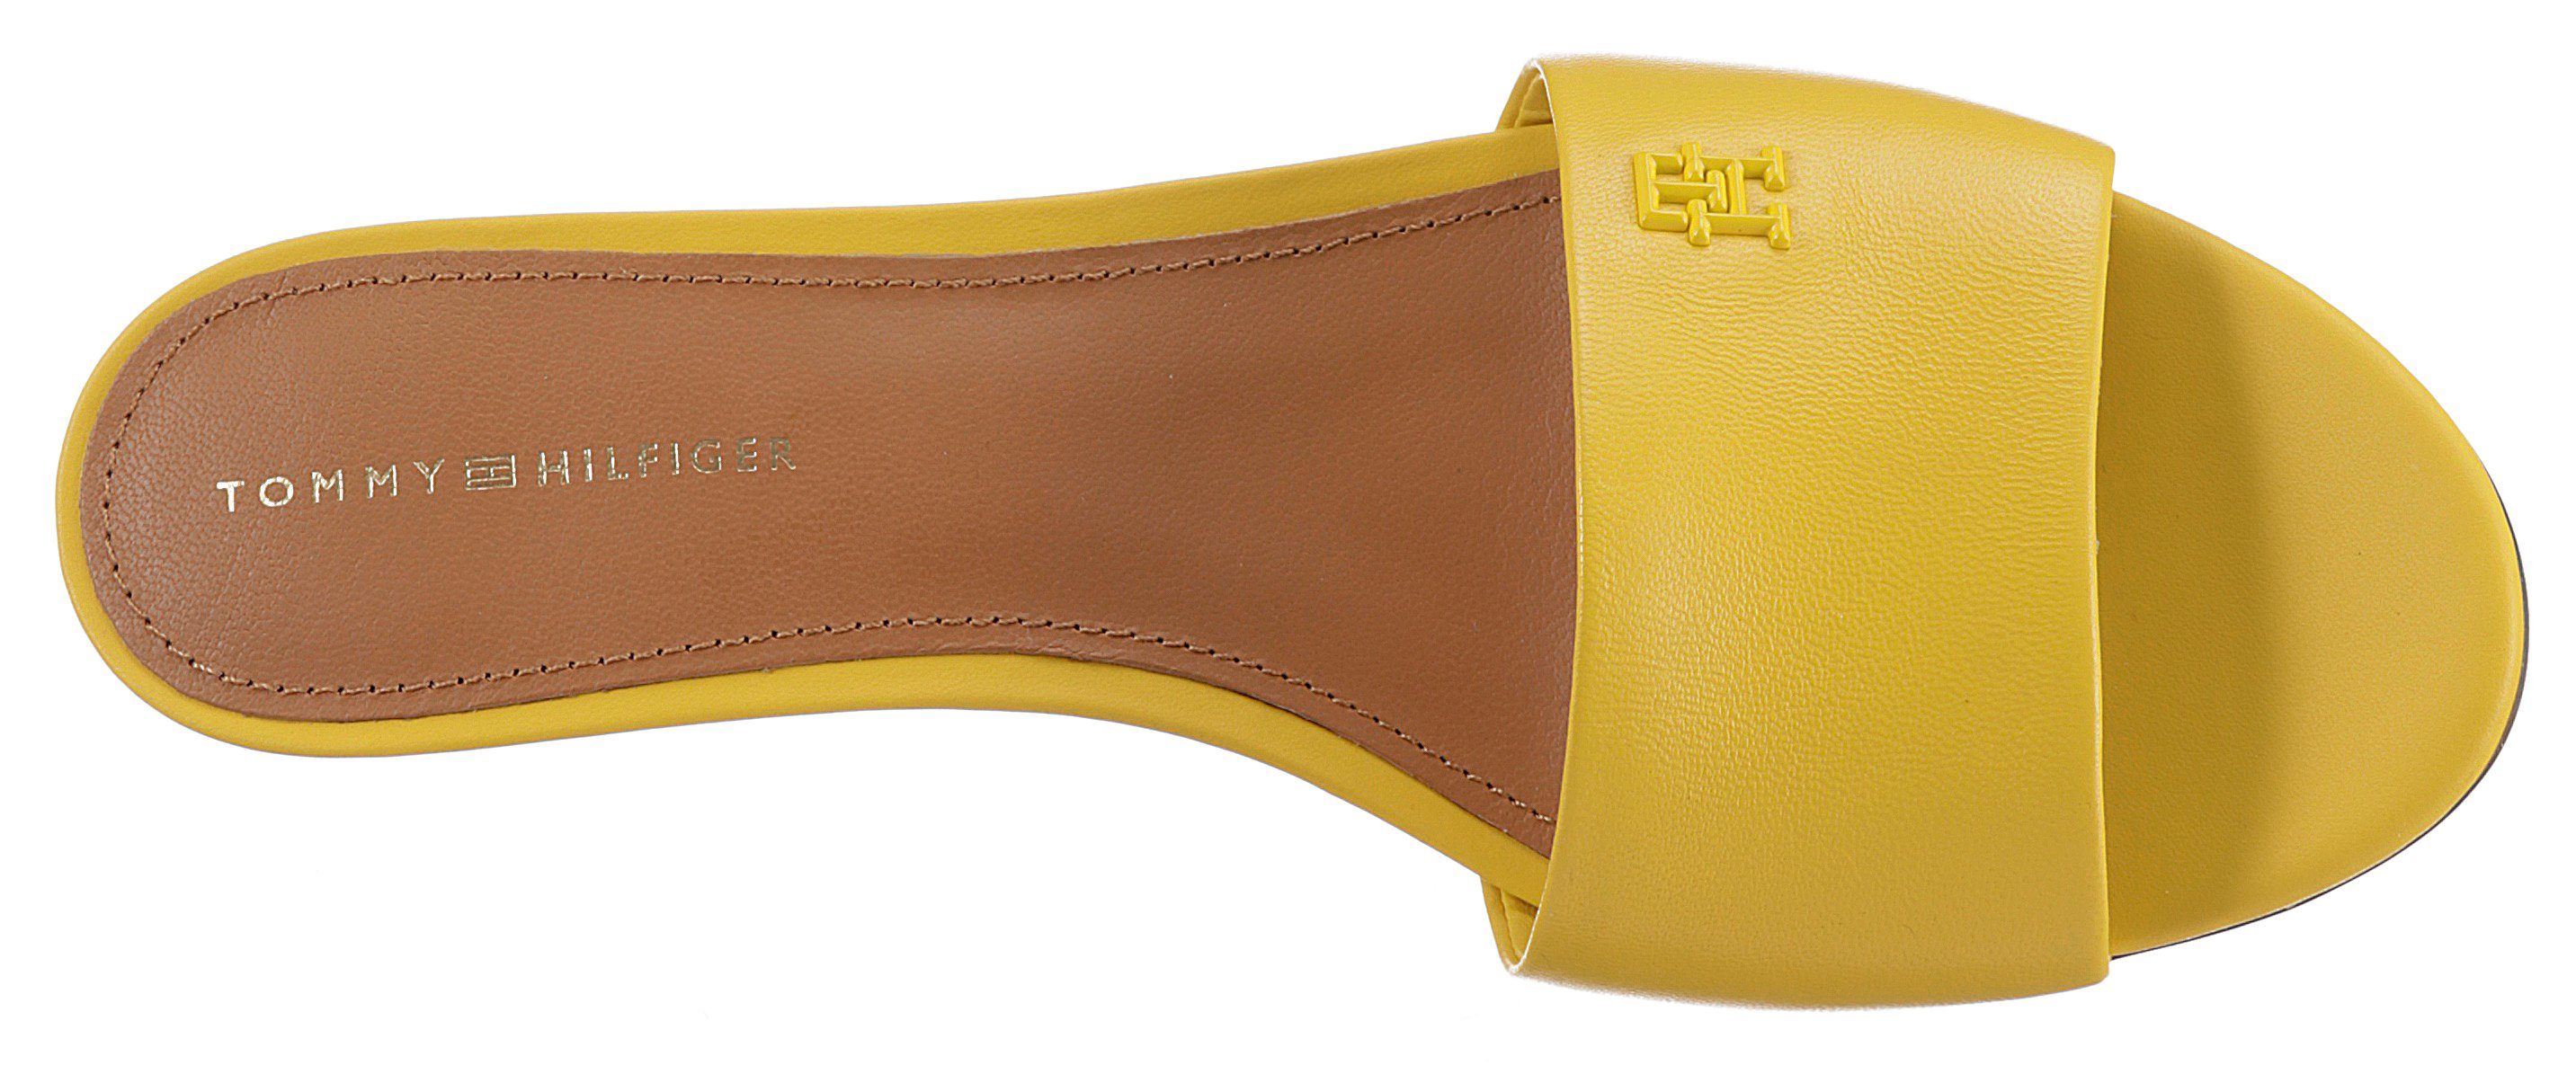 Tommy Pantolette schmale Form mit MID TH ELEVATED HEEL Trichterabsatz, gelb SANDAL Hilfiger elegantem